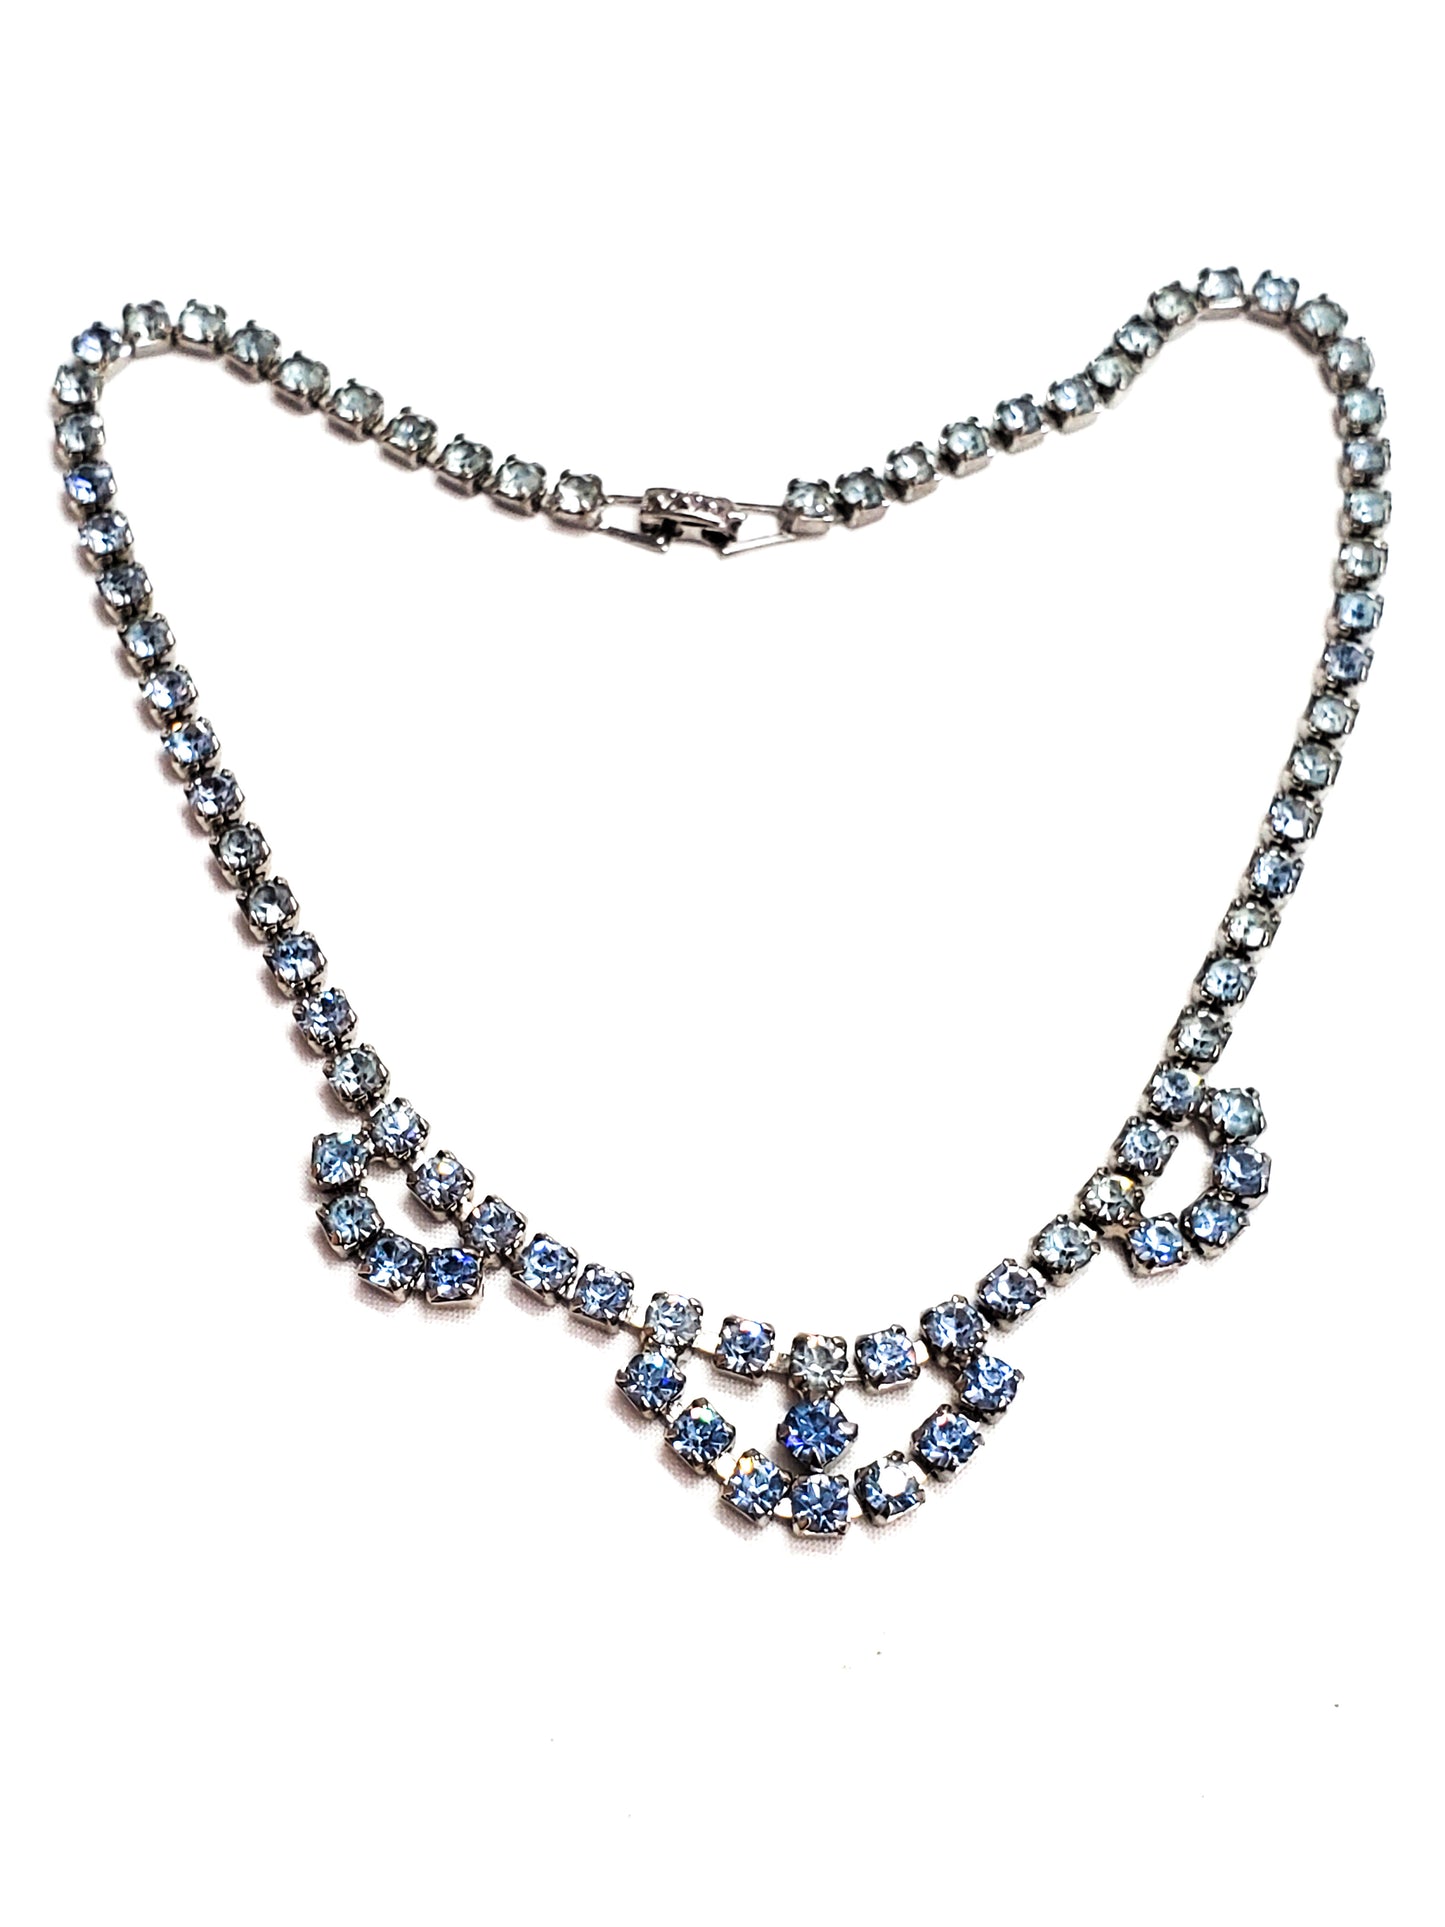 Jewelry Fashions baby blue scalloped rhinestone bib vintage necklace mid century